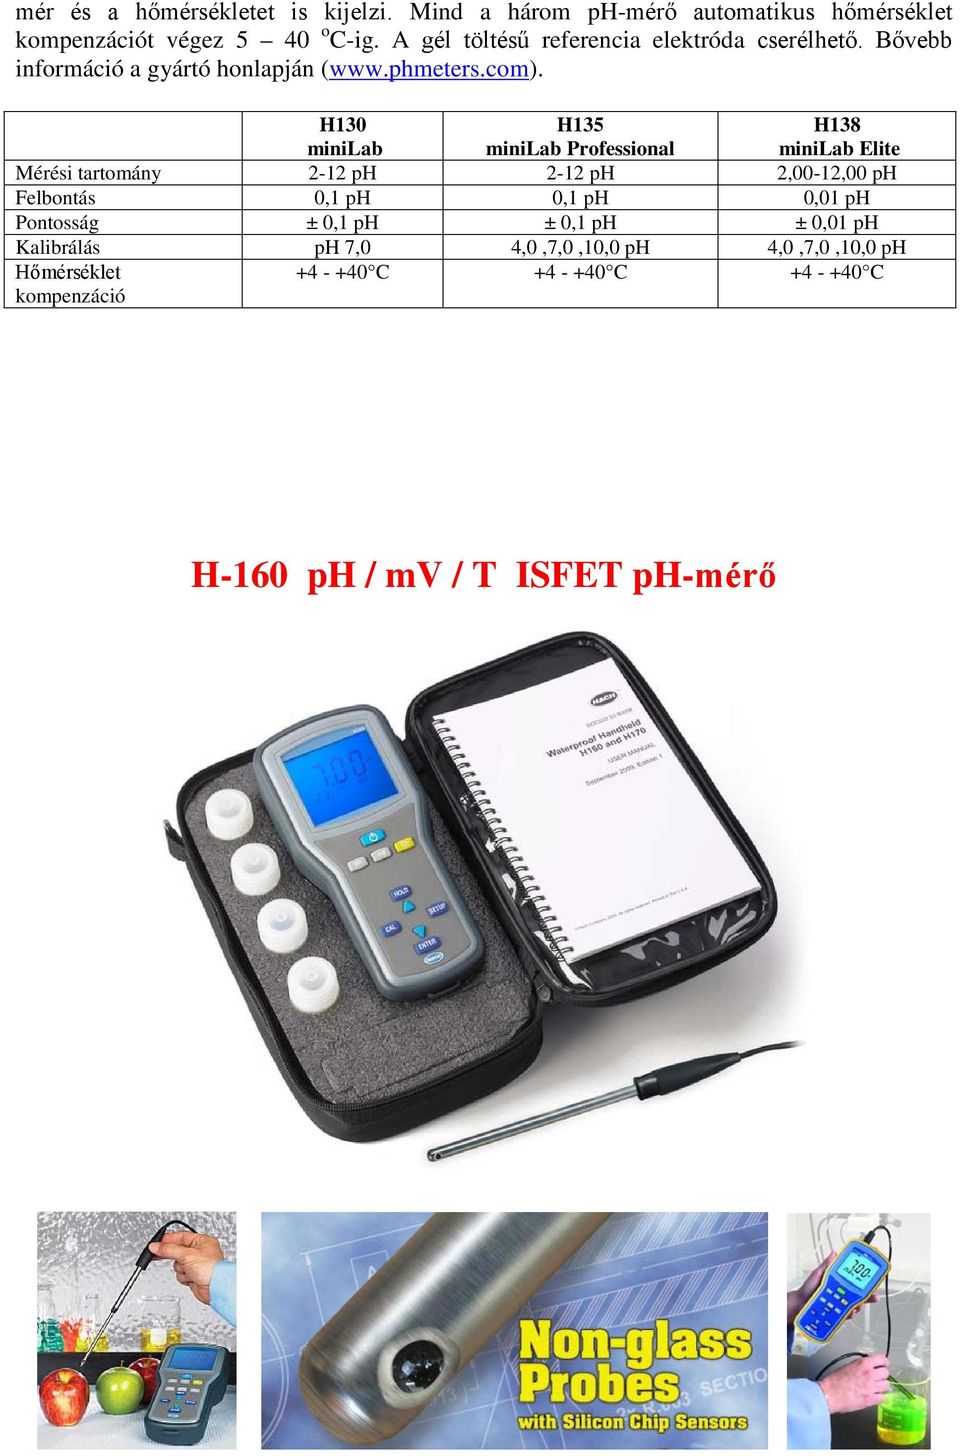 H130 minilab H135 minilab Professional H138 minilab Elite Mérési tartomány 2-12 ph 2-12 ph 2,00-12,00 ph Felbontás 0,1 ph 0,1 ph